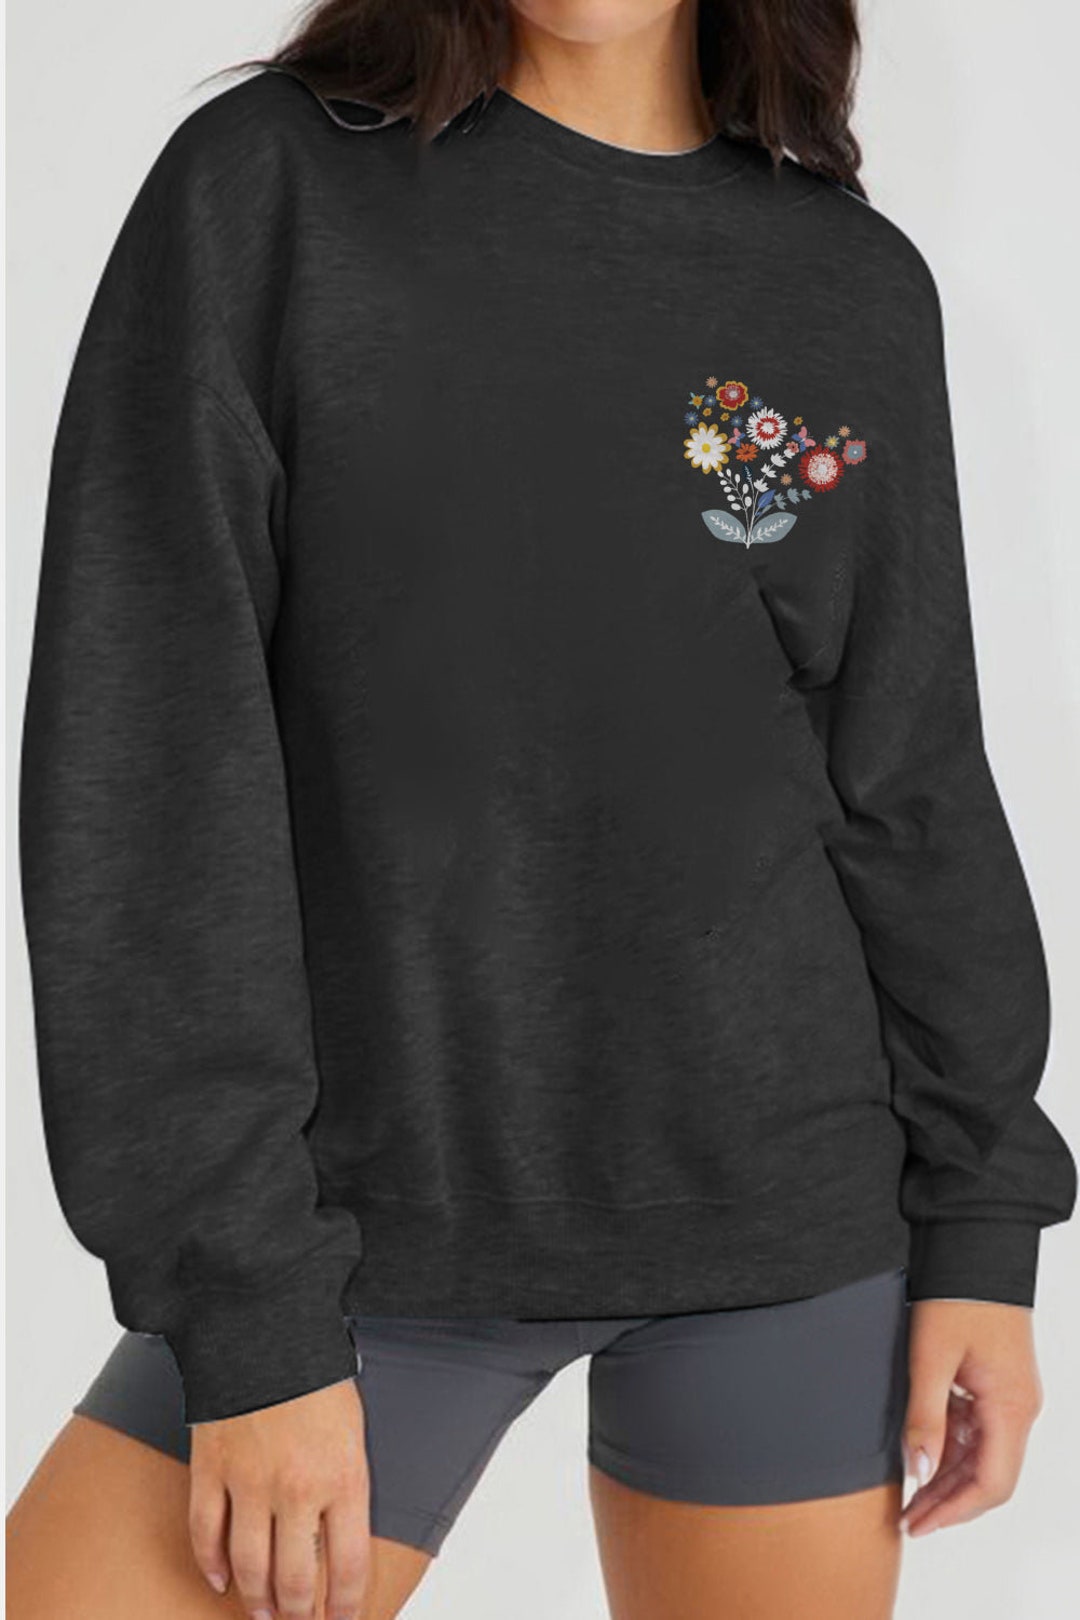 Simply Love Full Size Flower Graphic Sweatshirt - Etsy